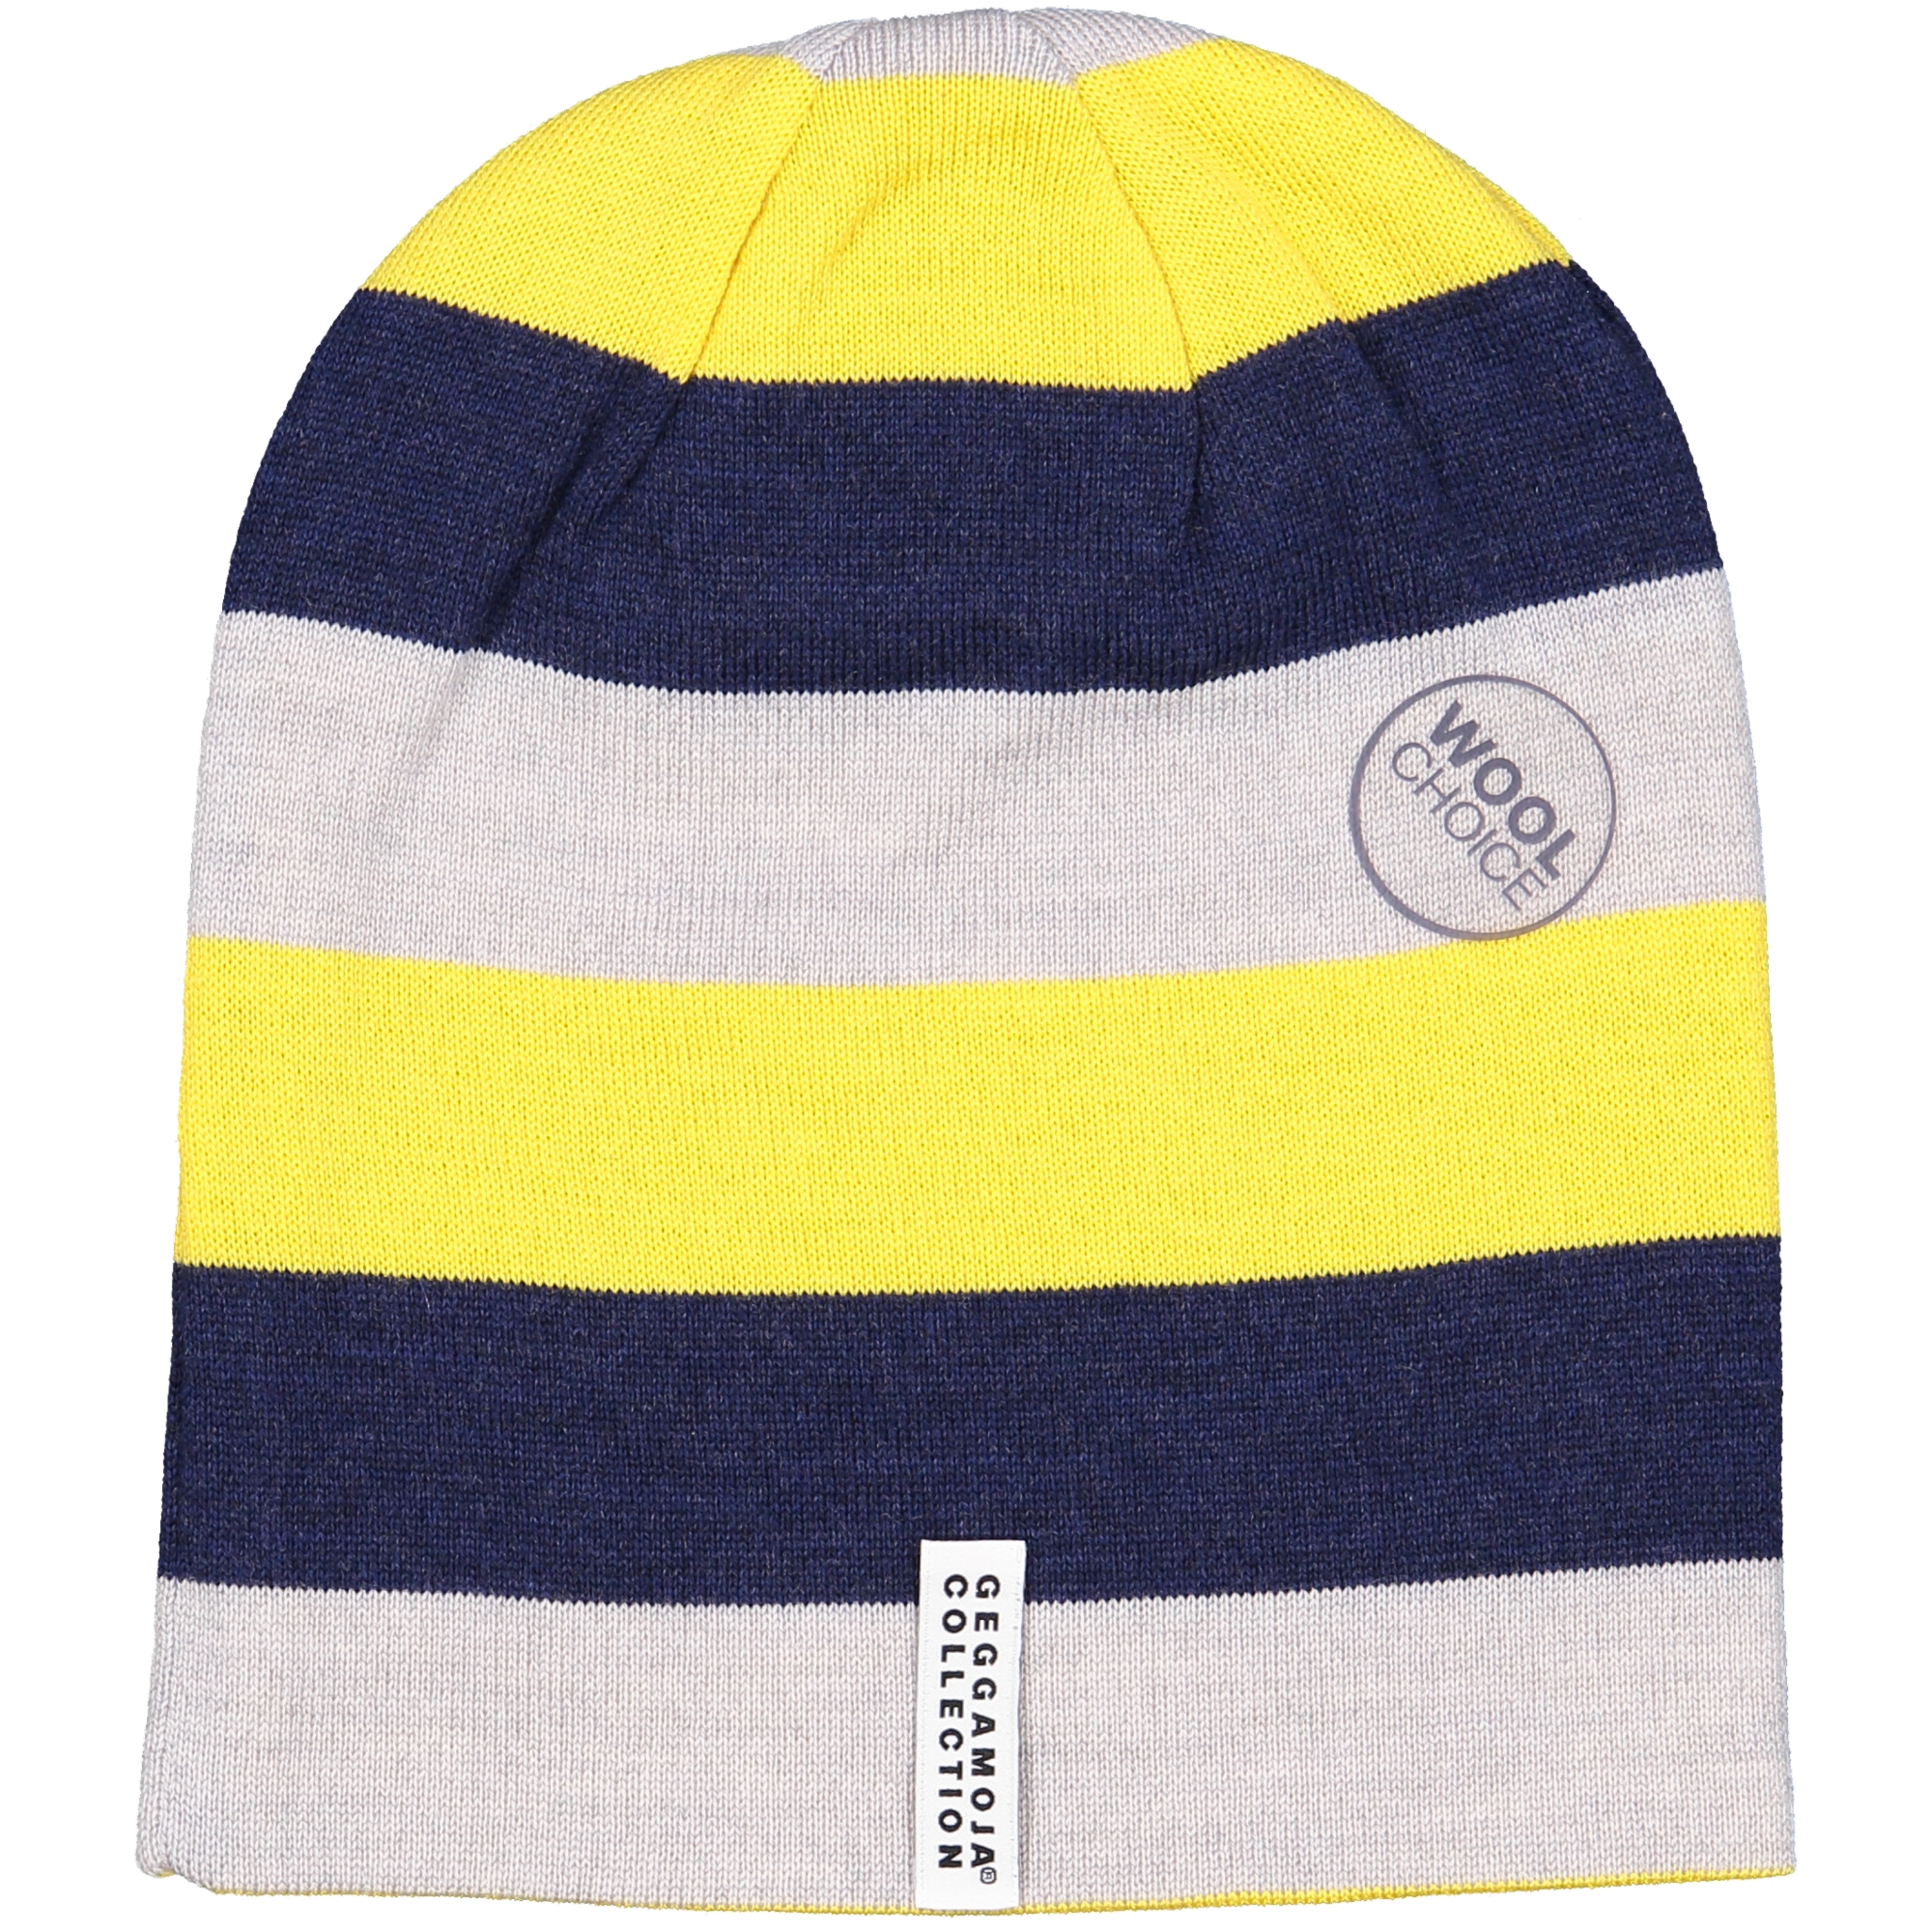 Wool cap Yellow stripe